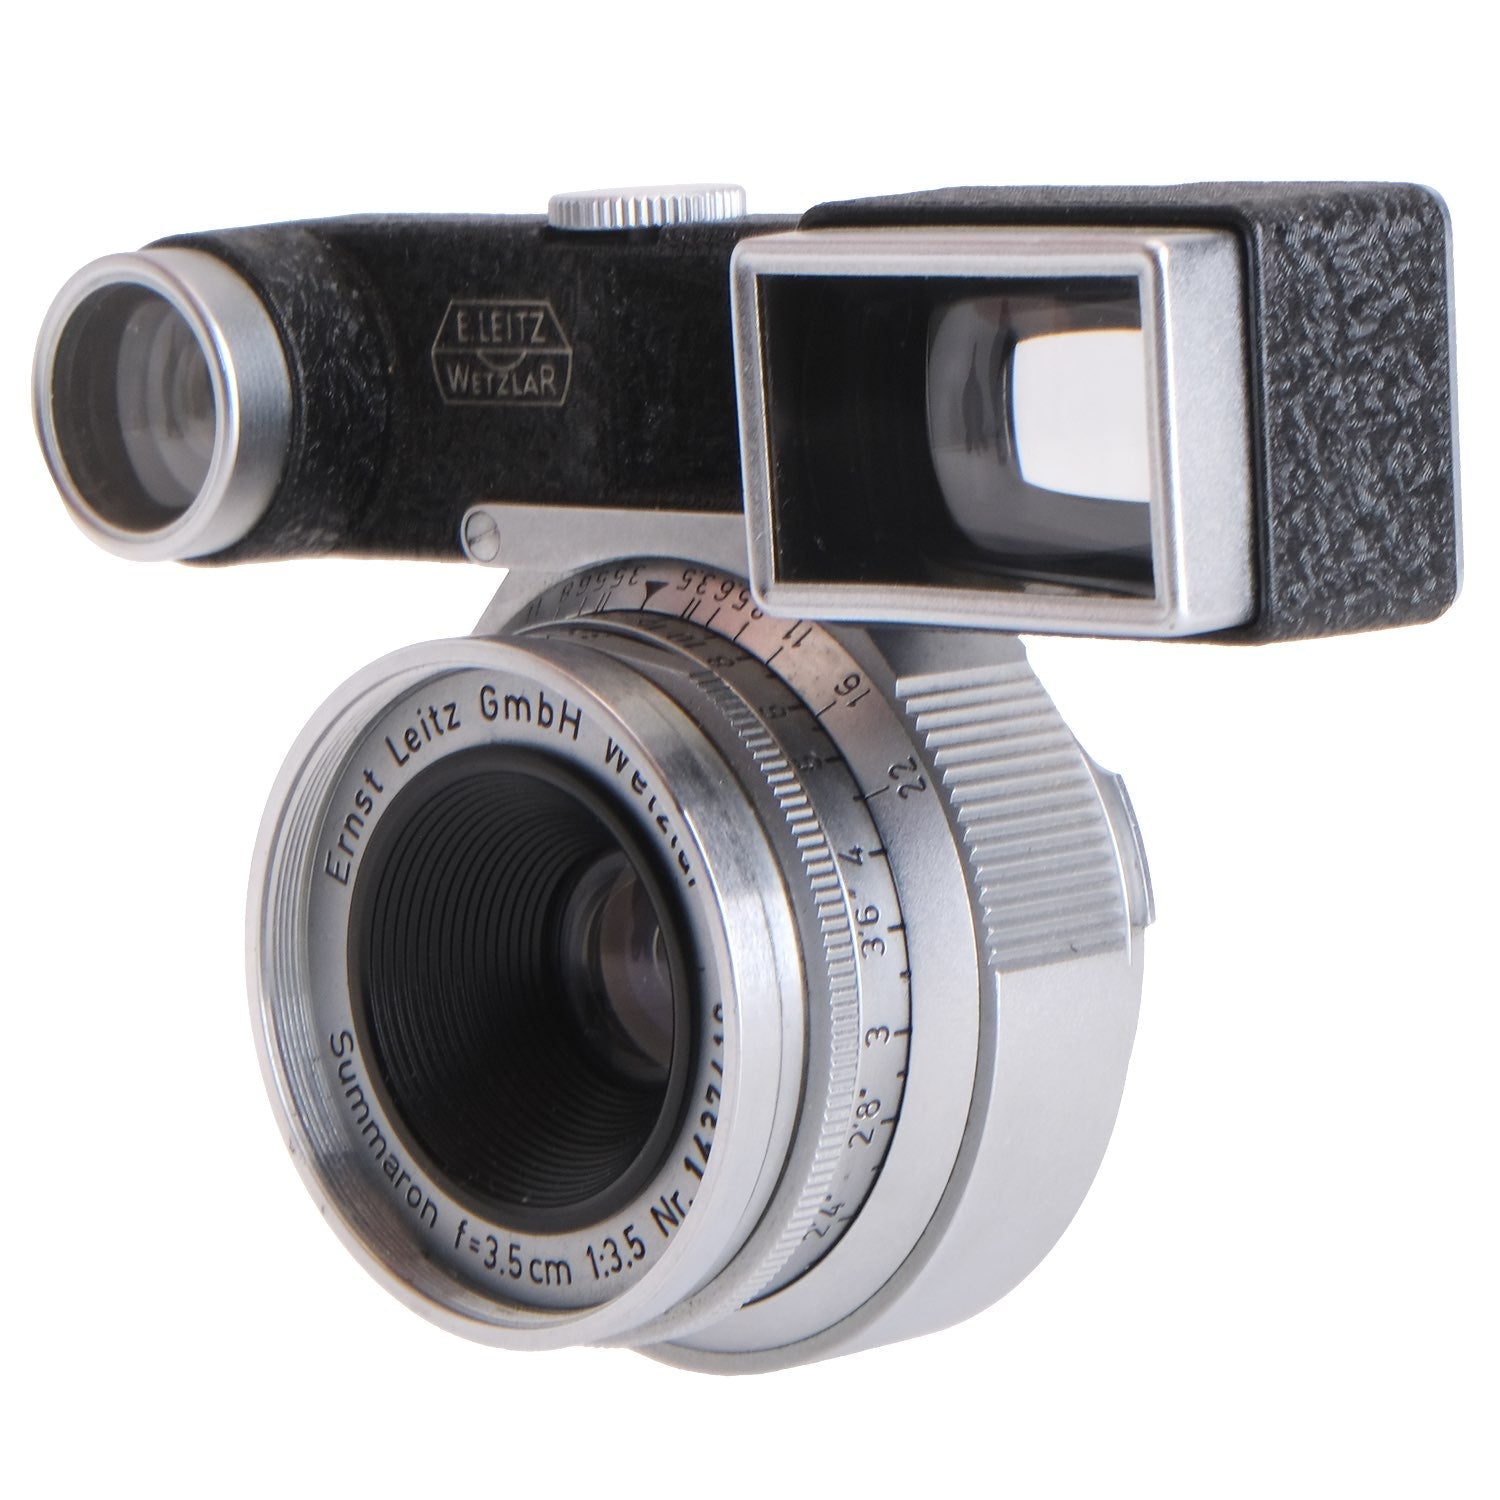 Leica 3.5cm f3.5 Summaron M3 1437410 – Leica Store San Francisco